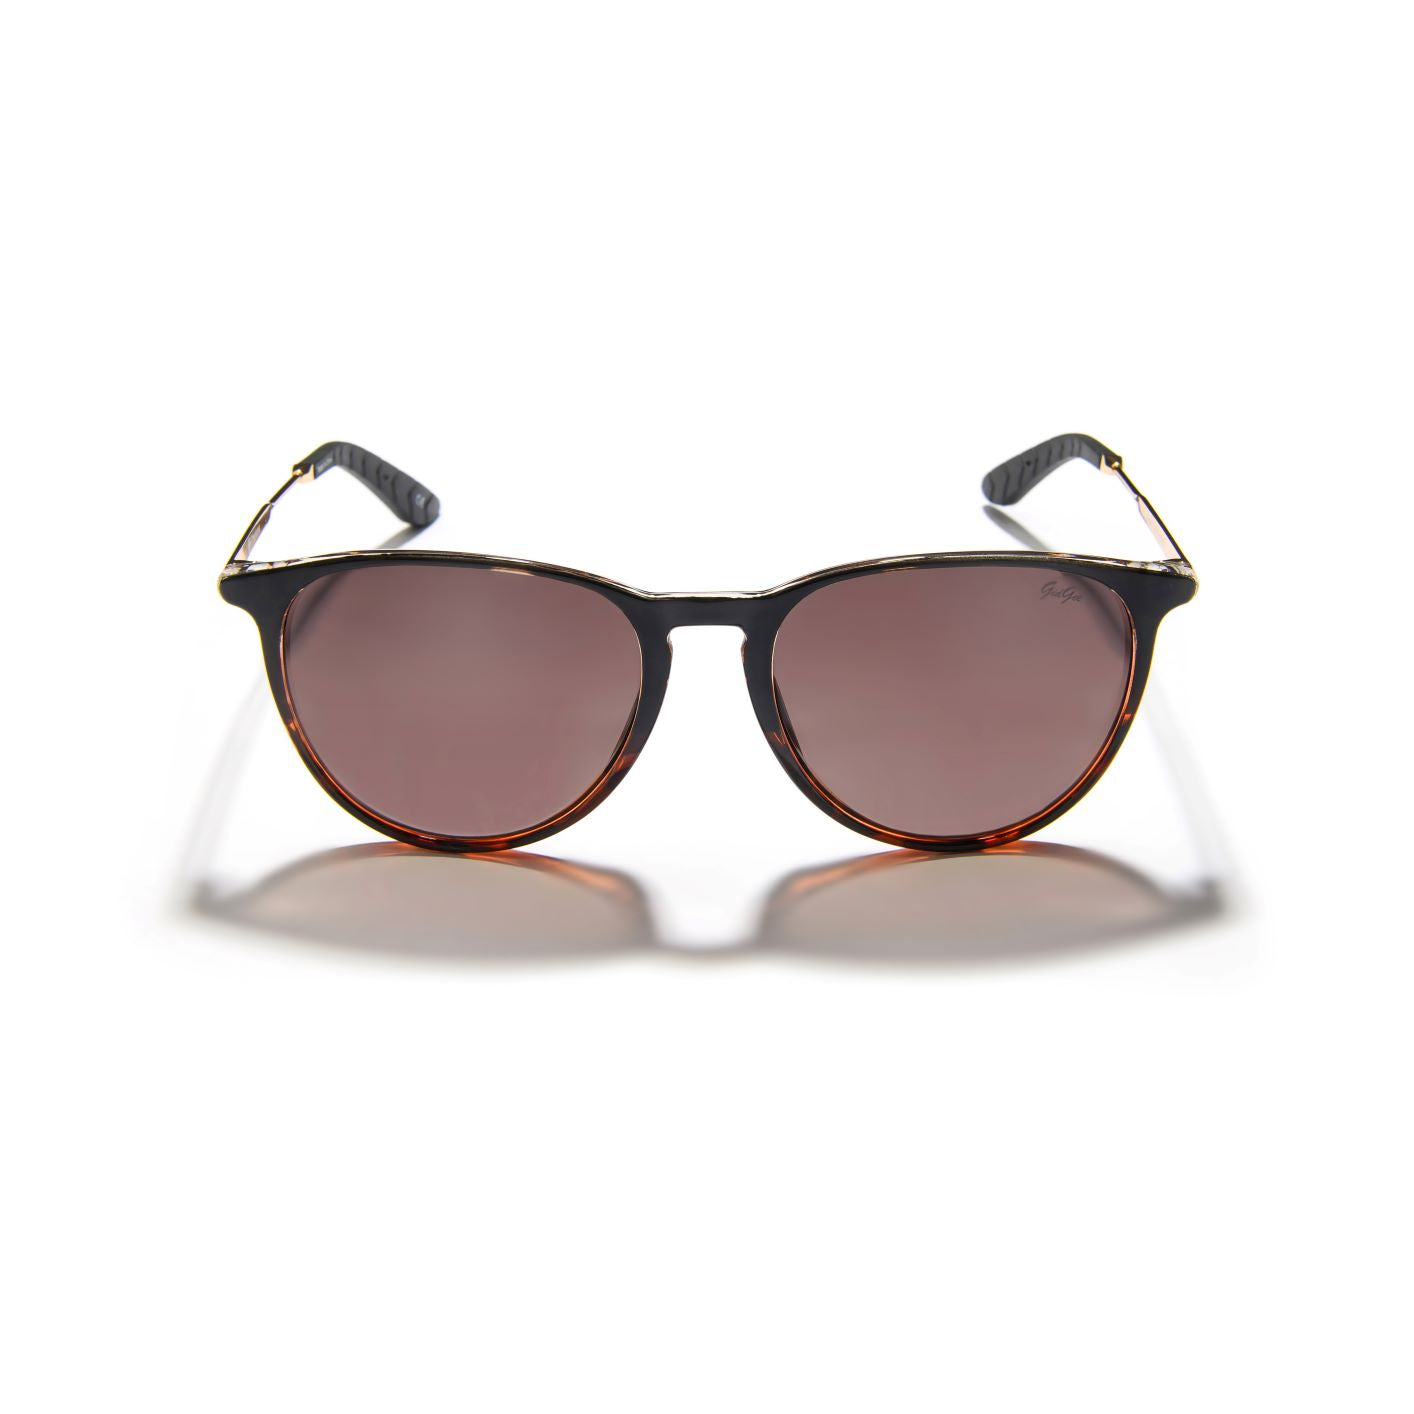 Gidgee Eyewear - Charisma Ombre Sunglasses